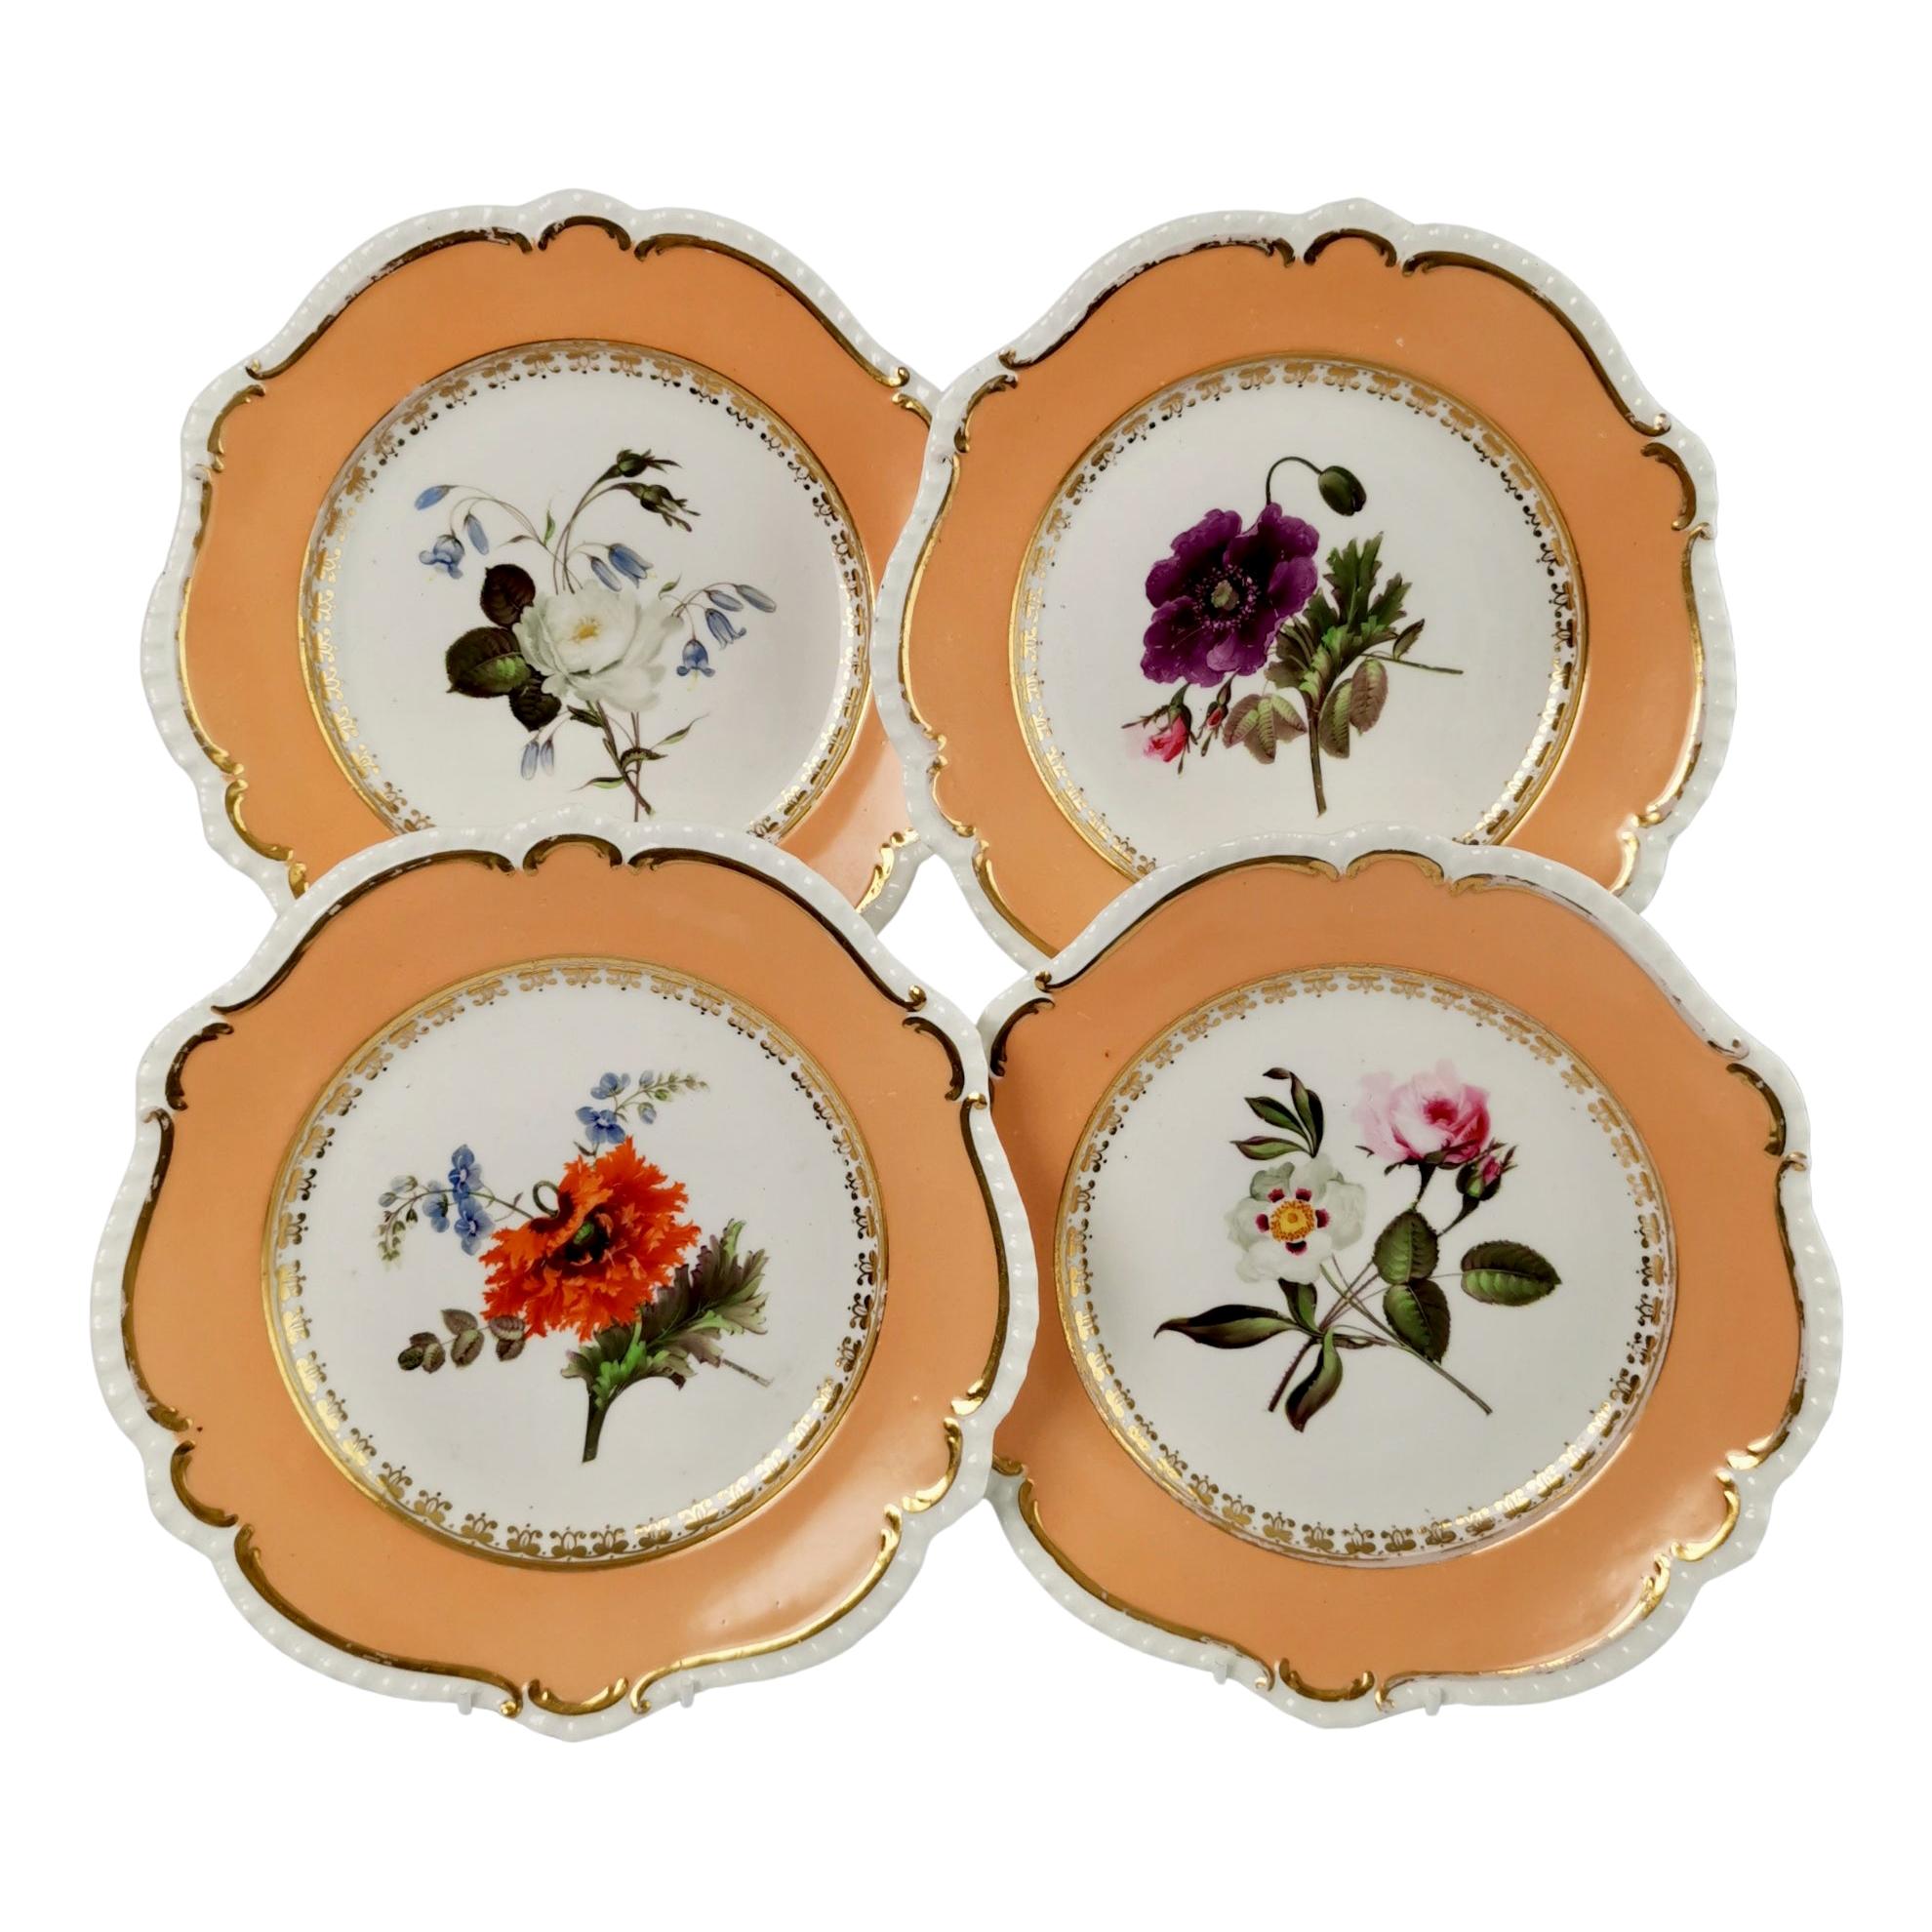 Coalport Set of 4 Plates, Peach with Flowers, Porcelain, Regency 1820-1825